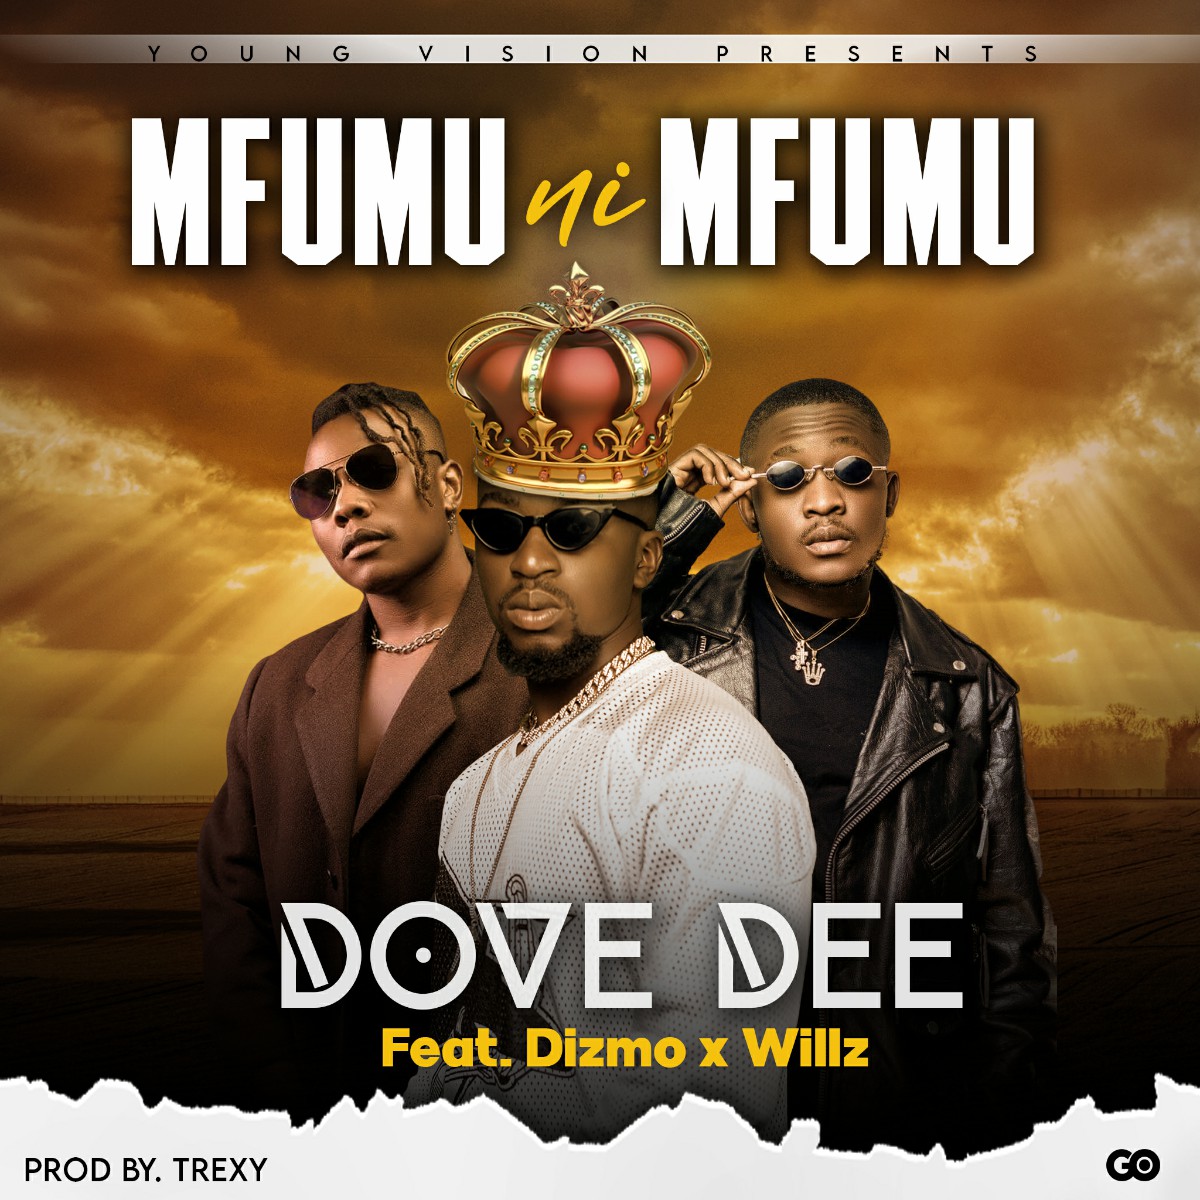 Dove Dee ft. Dizmo & Willz - Mfumu ni Mfumu